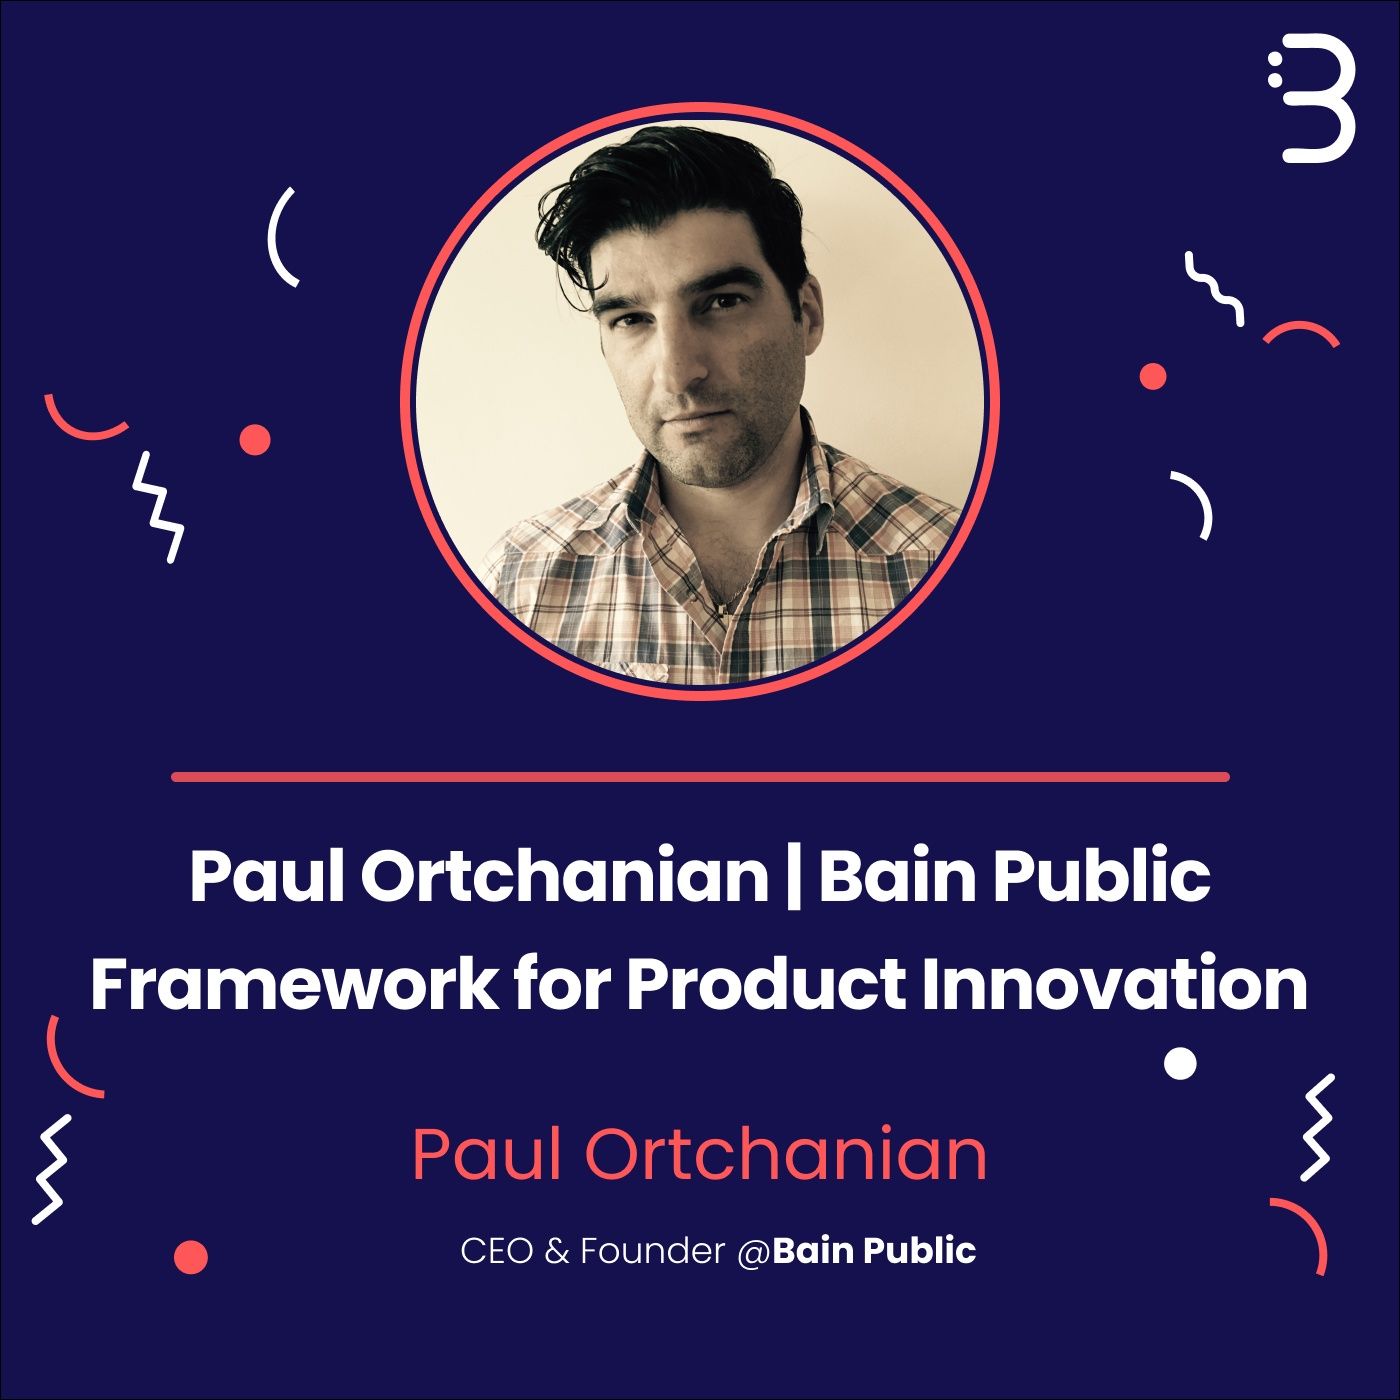 Paul Ortchanian | Bain Public - Framework for Product Innovation